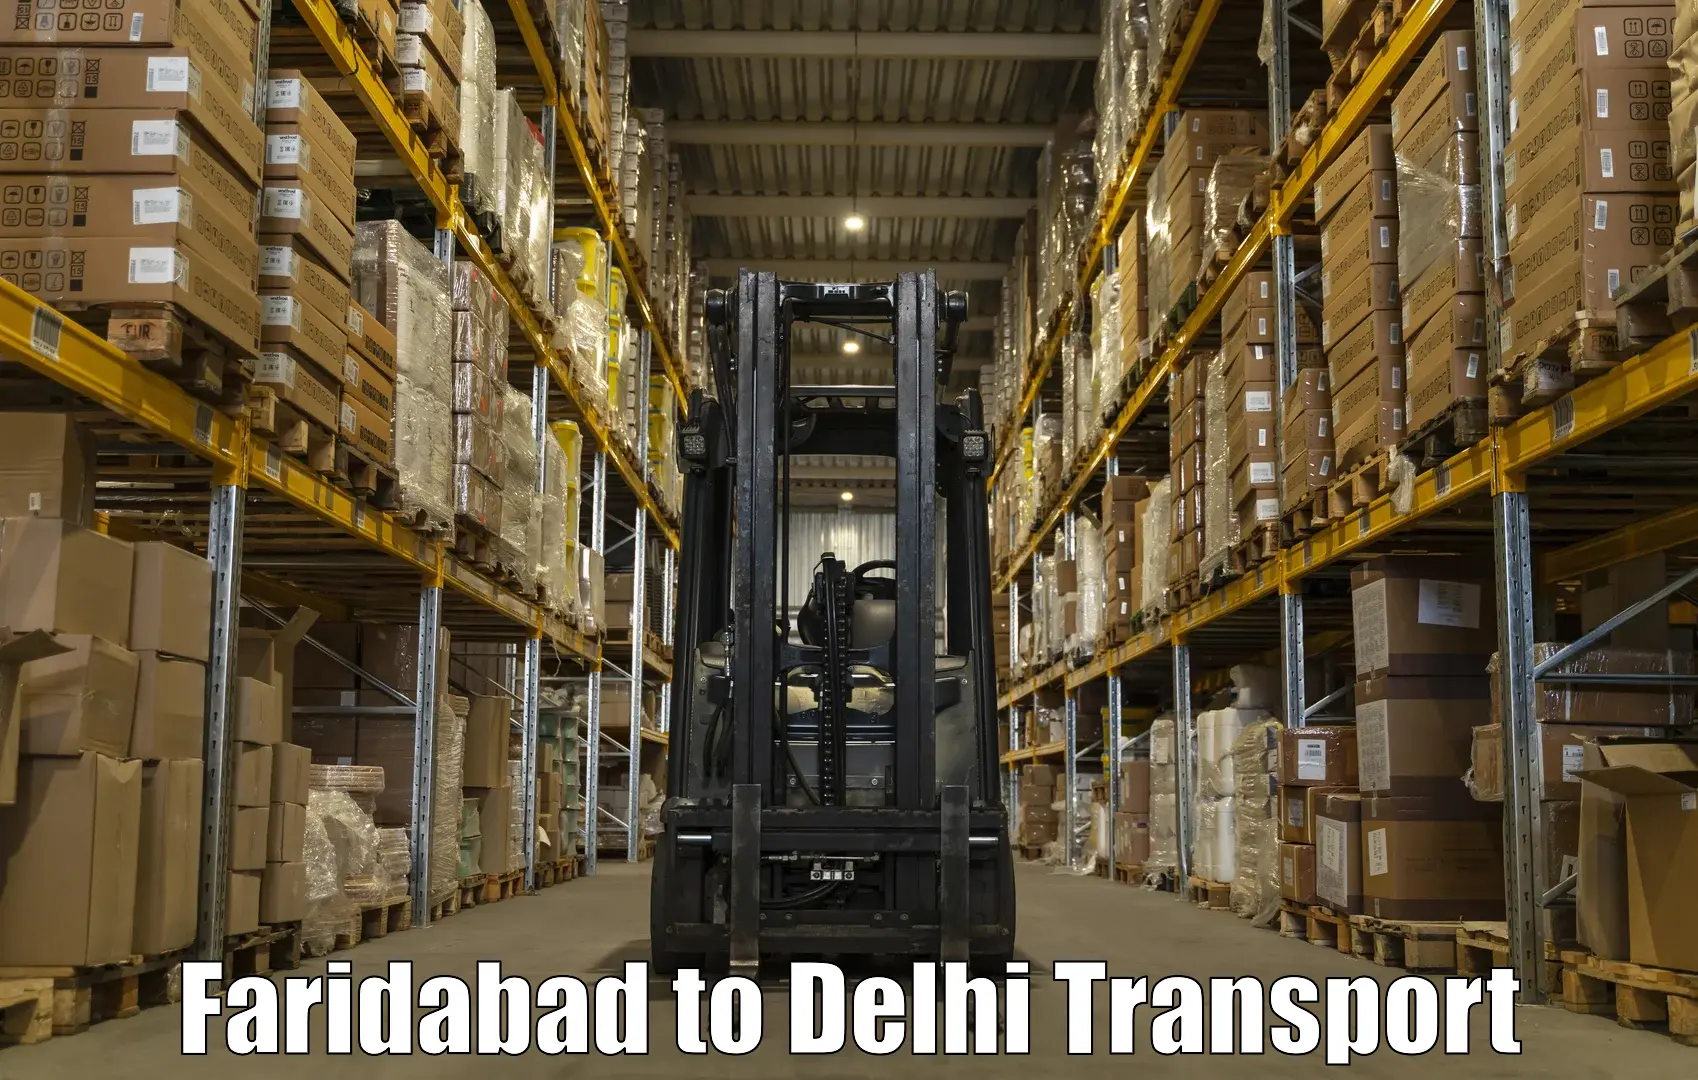 Transport in sharing Faridabad to Lodhi Road